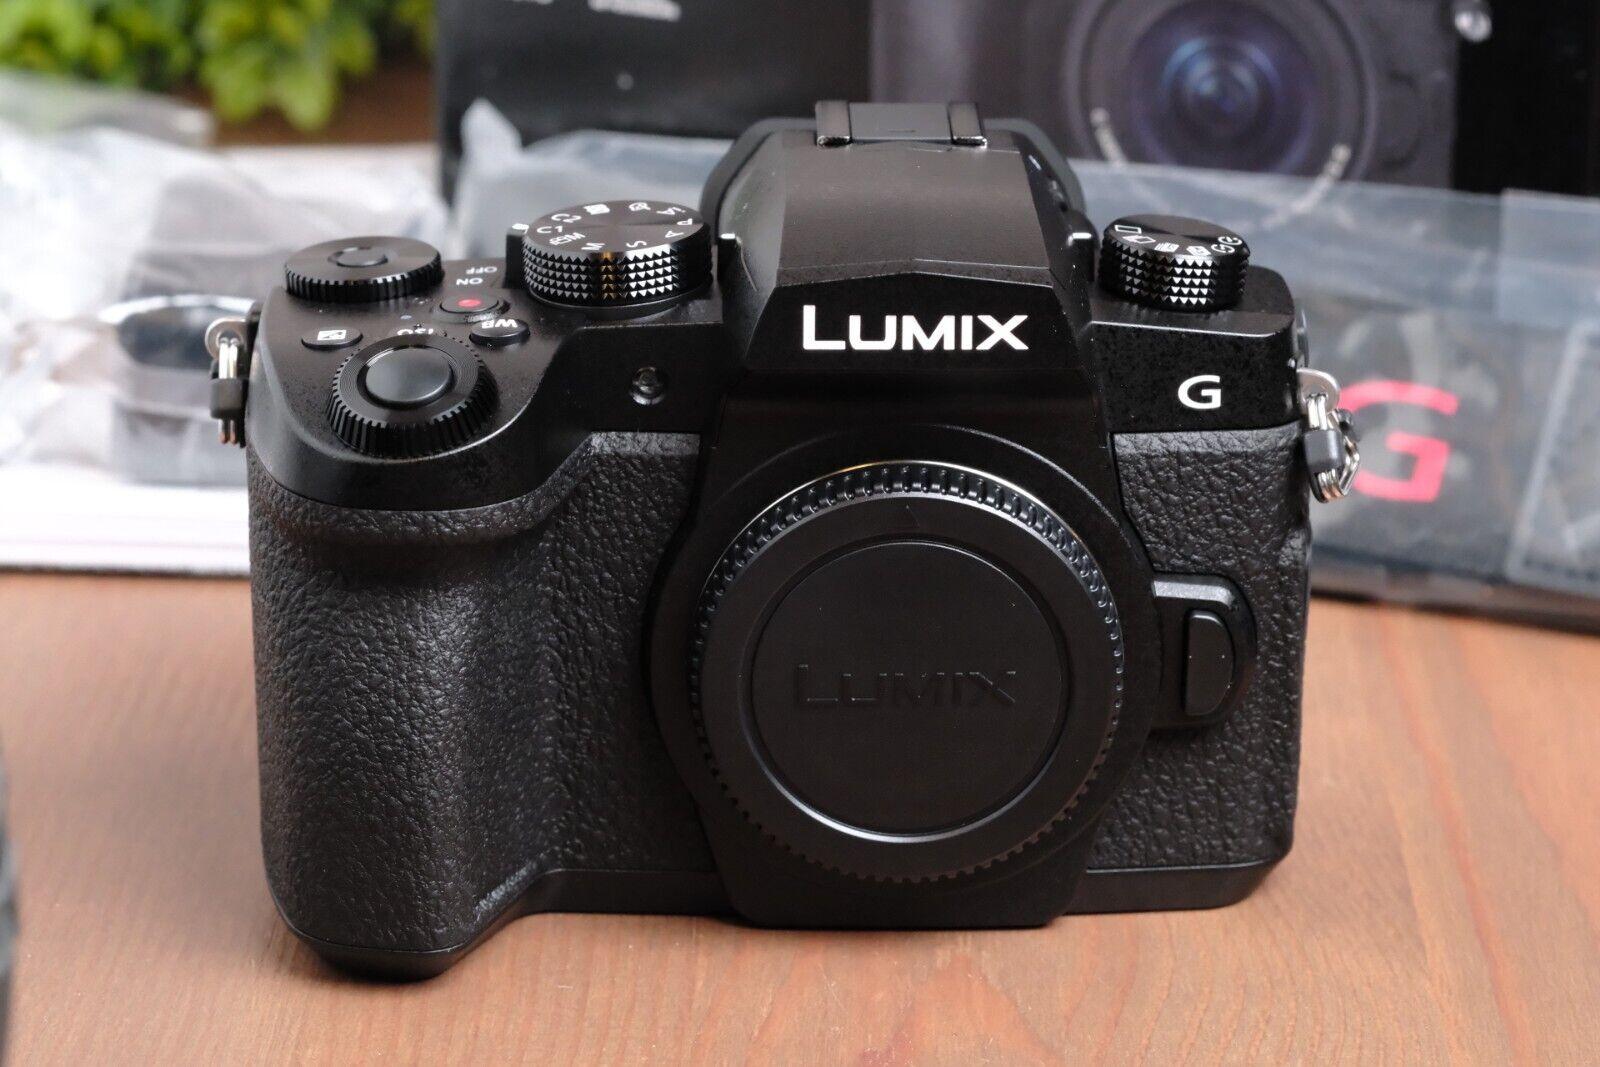 5. Panasonic Lumix G95D